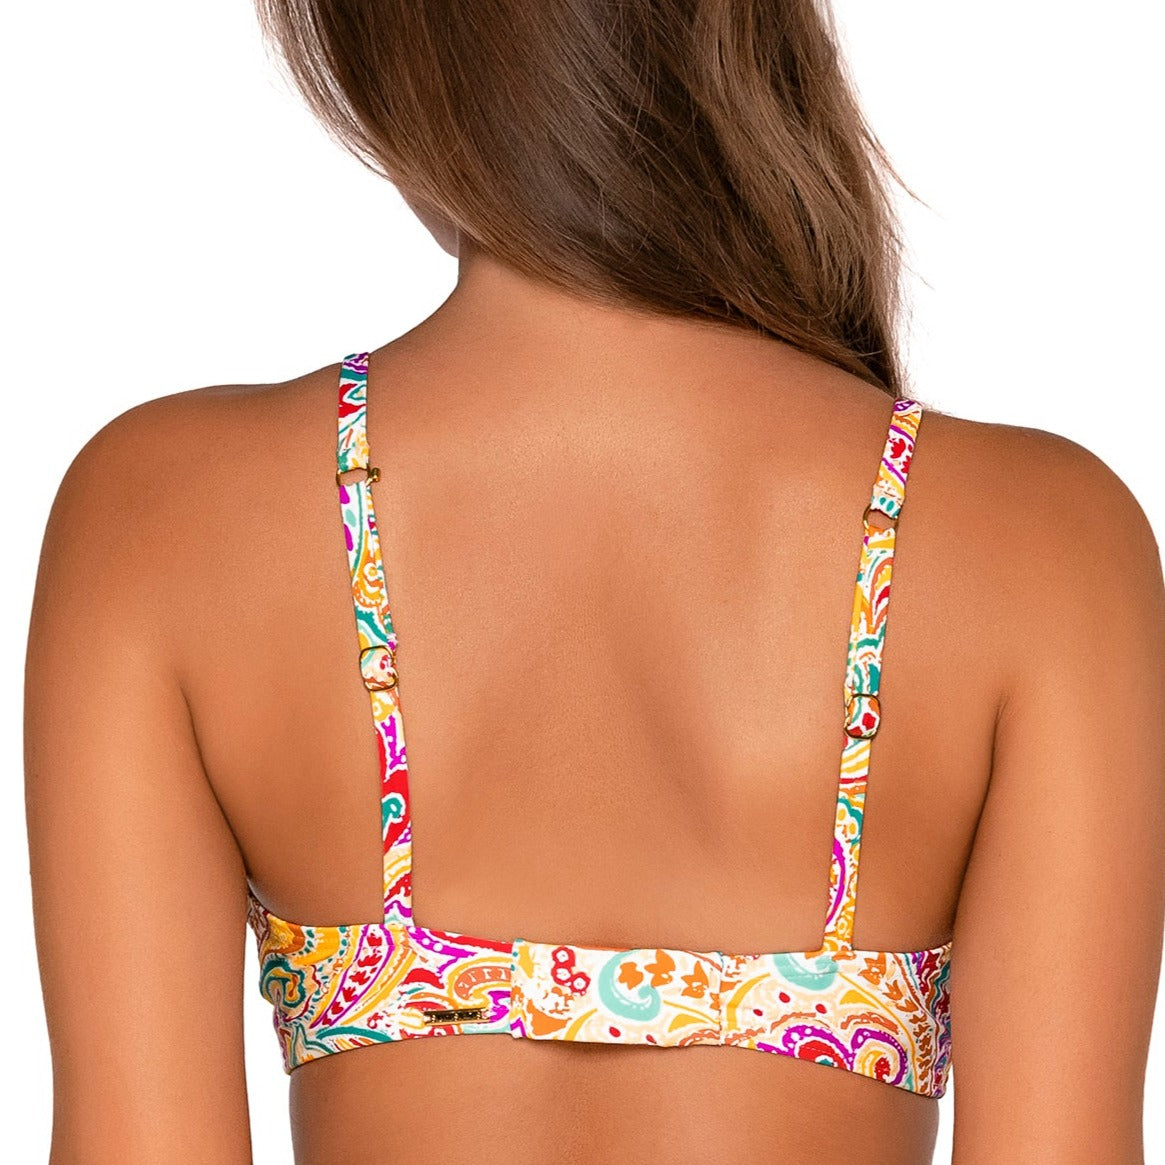 Kauai Keyhole Bikini Top - 54 - Phoenix Swim - Tops - Bikinis Sunsets, Inc.   